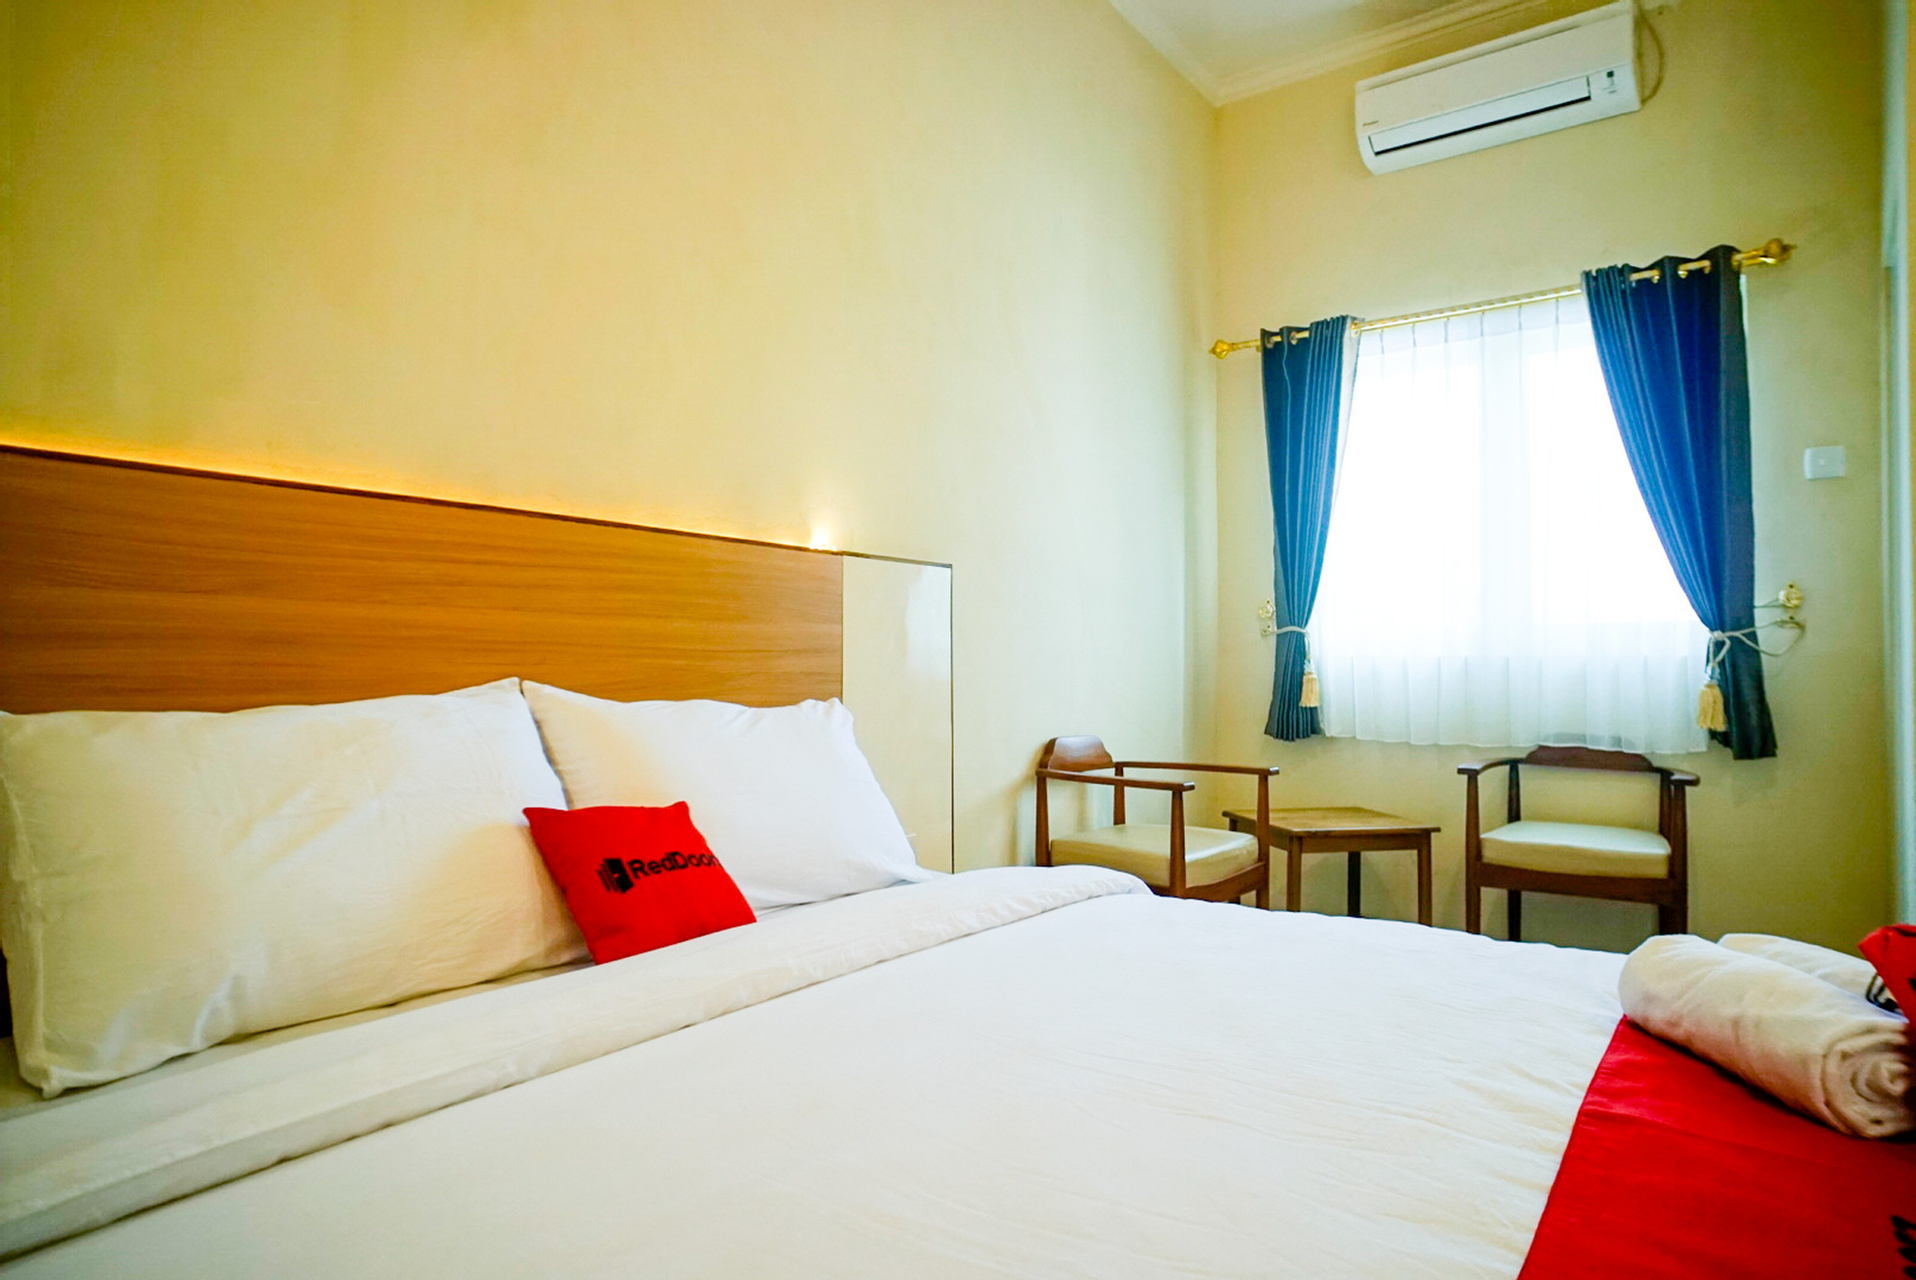 Bedroom 3, RedDoorz Plus near Malang Airport, Malang